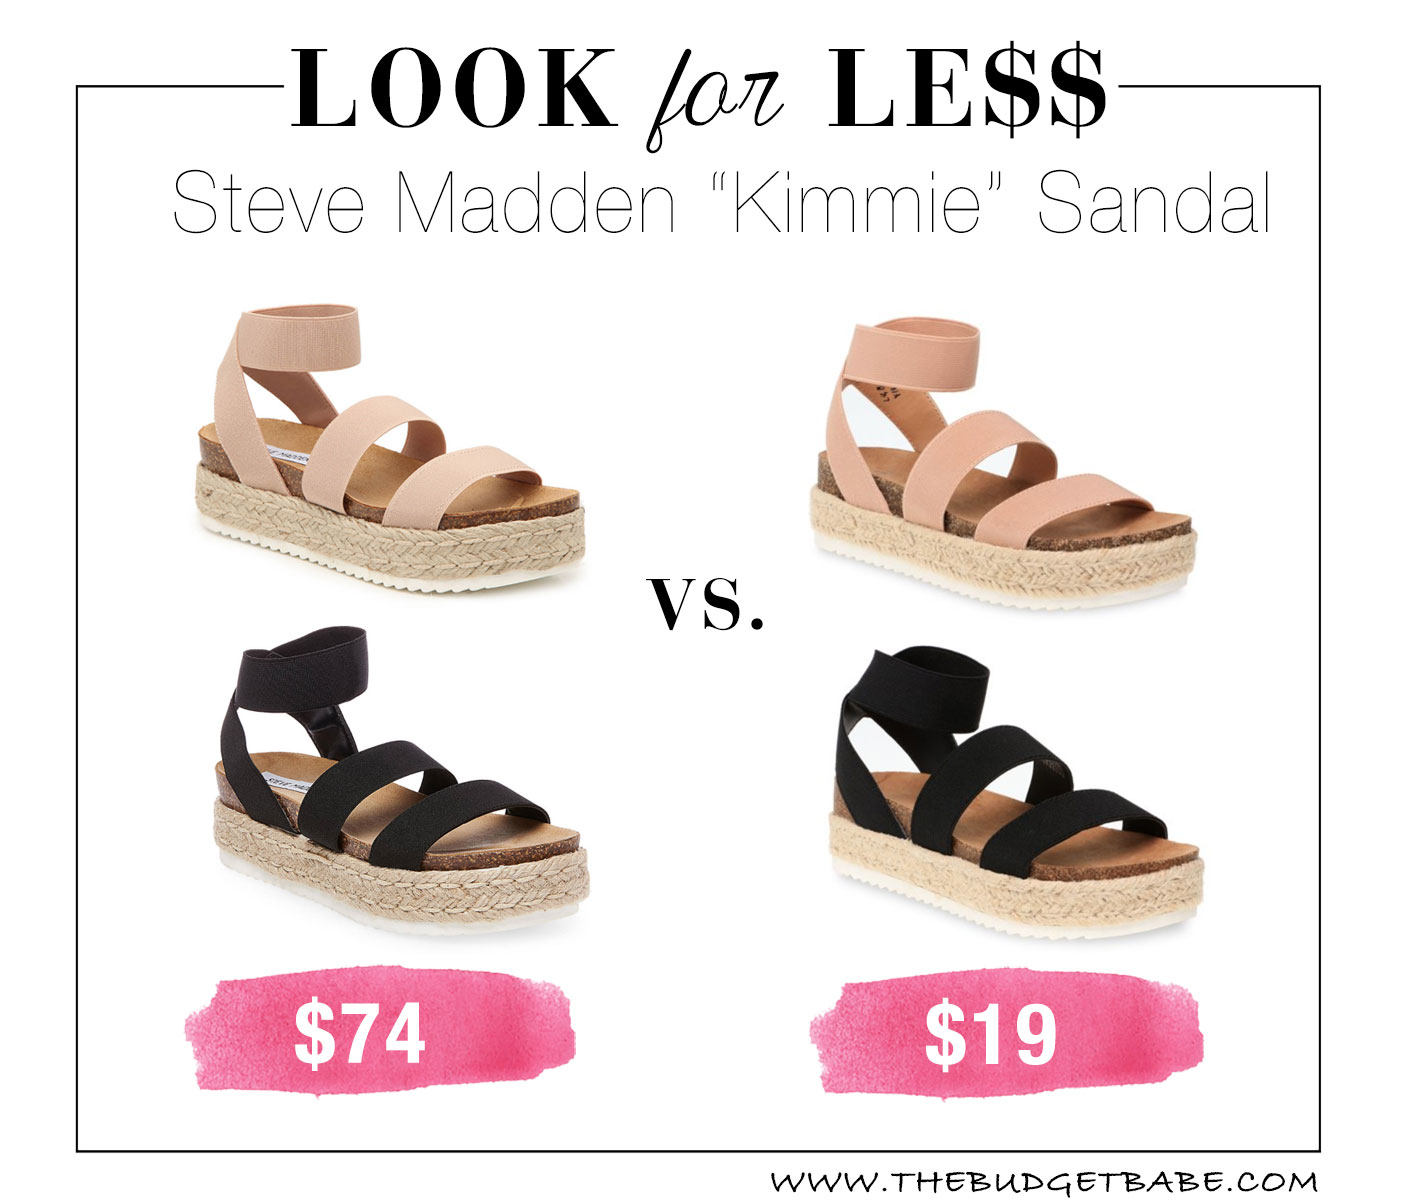 Steve Madden 'Kimmie' dupe sandals at Walmart